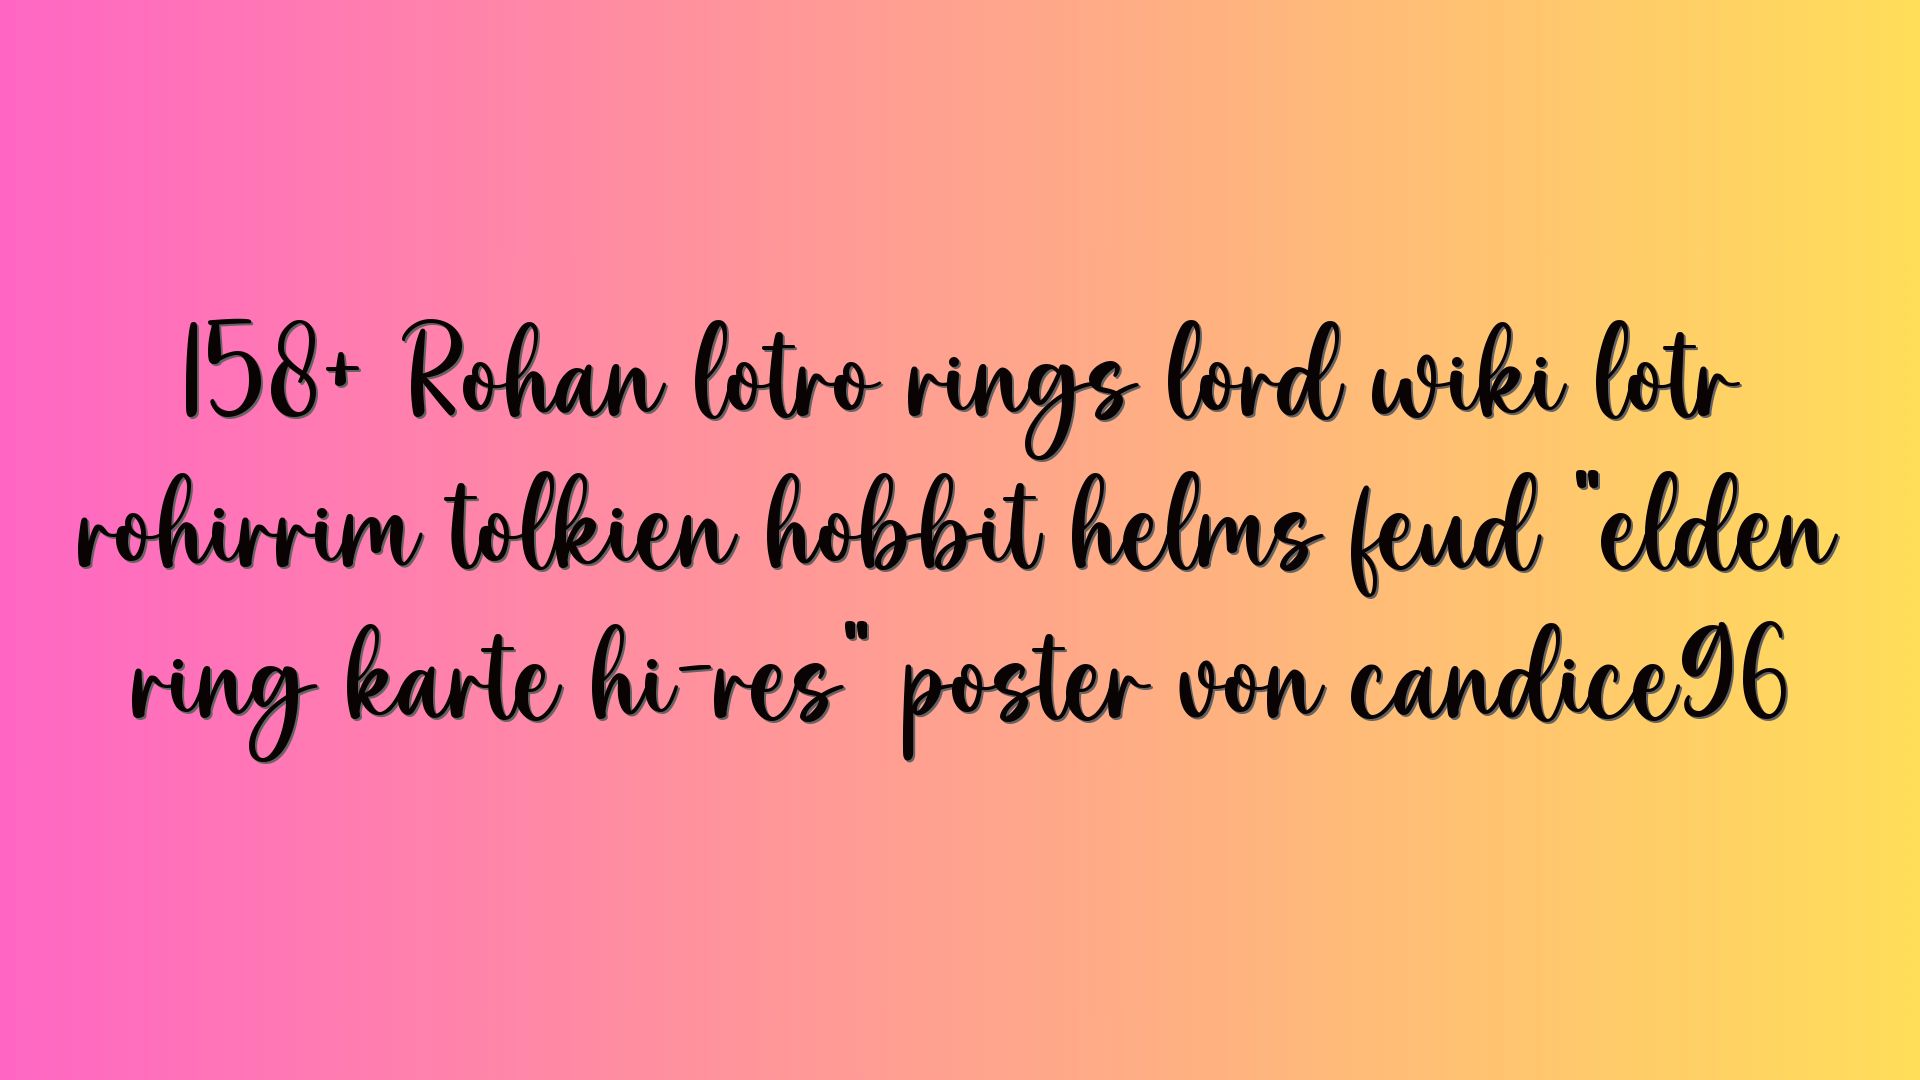 158+ Rohan lotro rings lord wiki lotr rohirrim tolkien hobbit helms feud “elden ring karte hi-res” poster von candice96